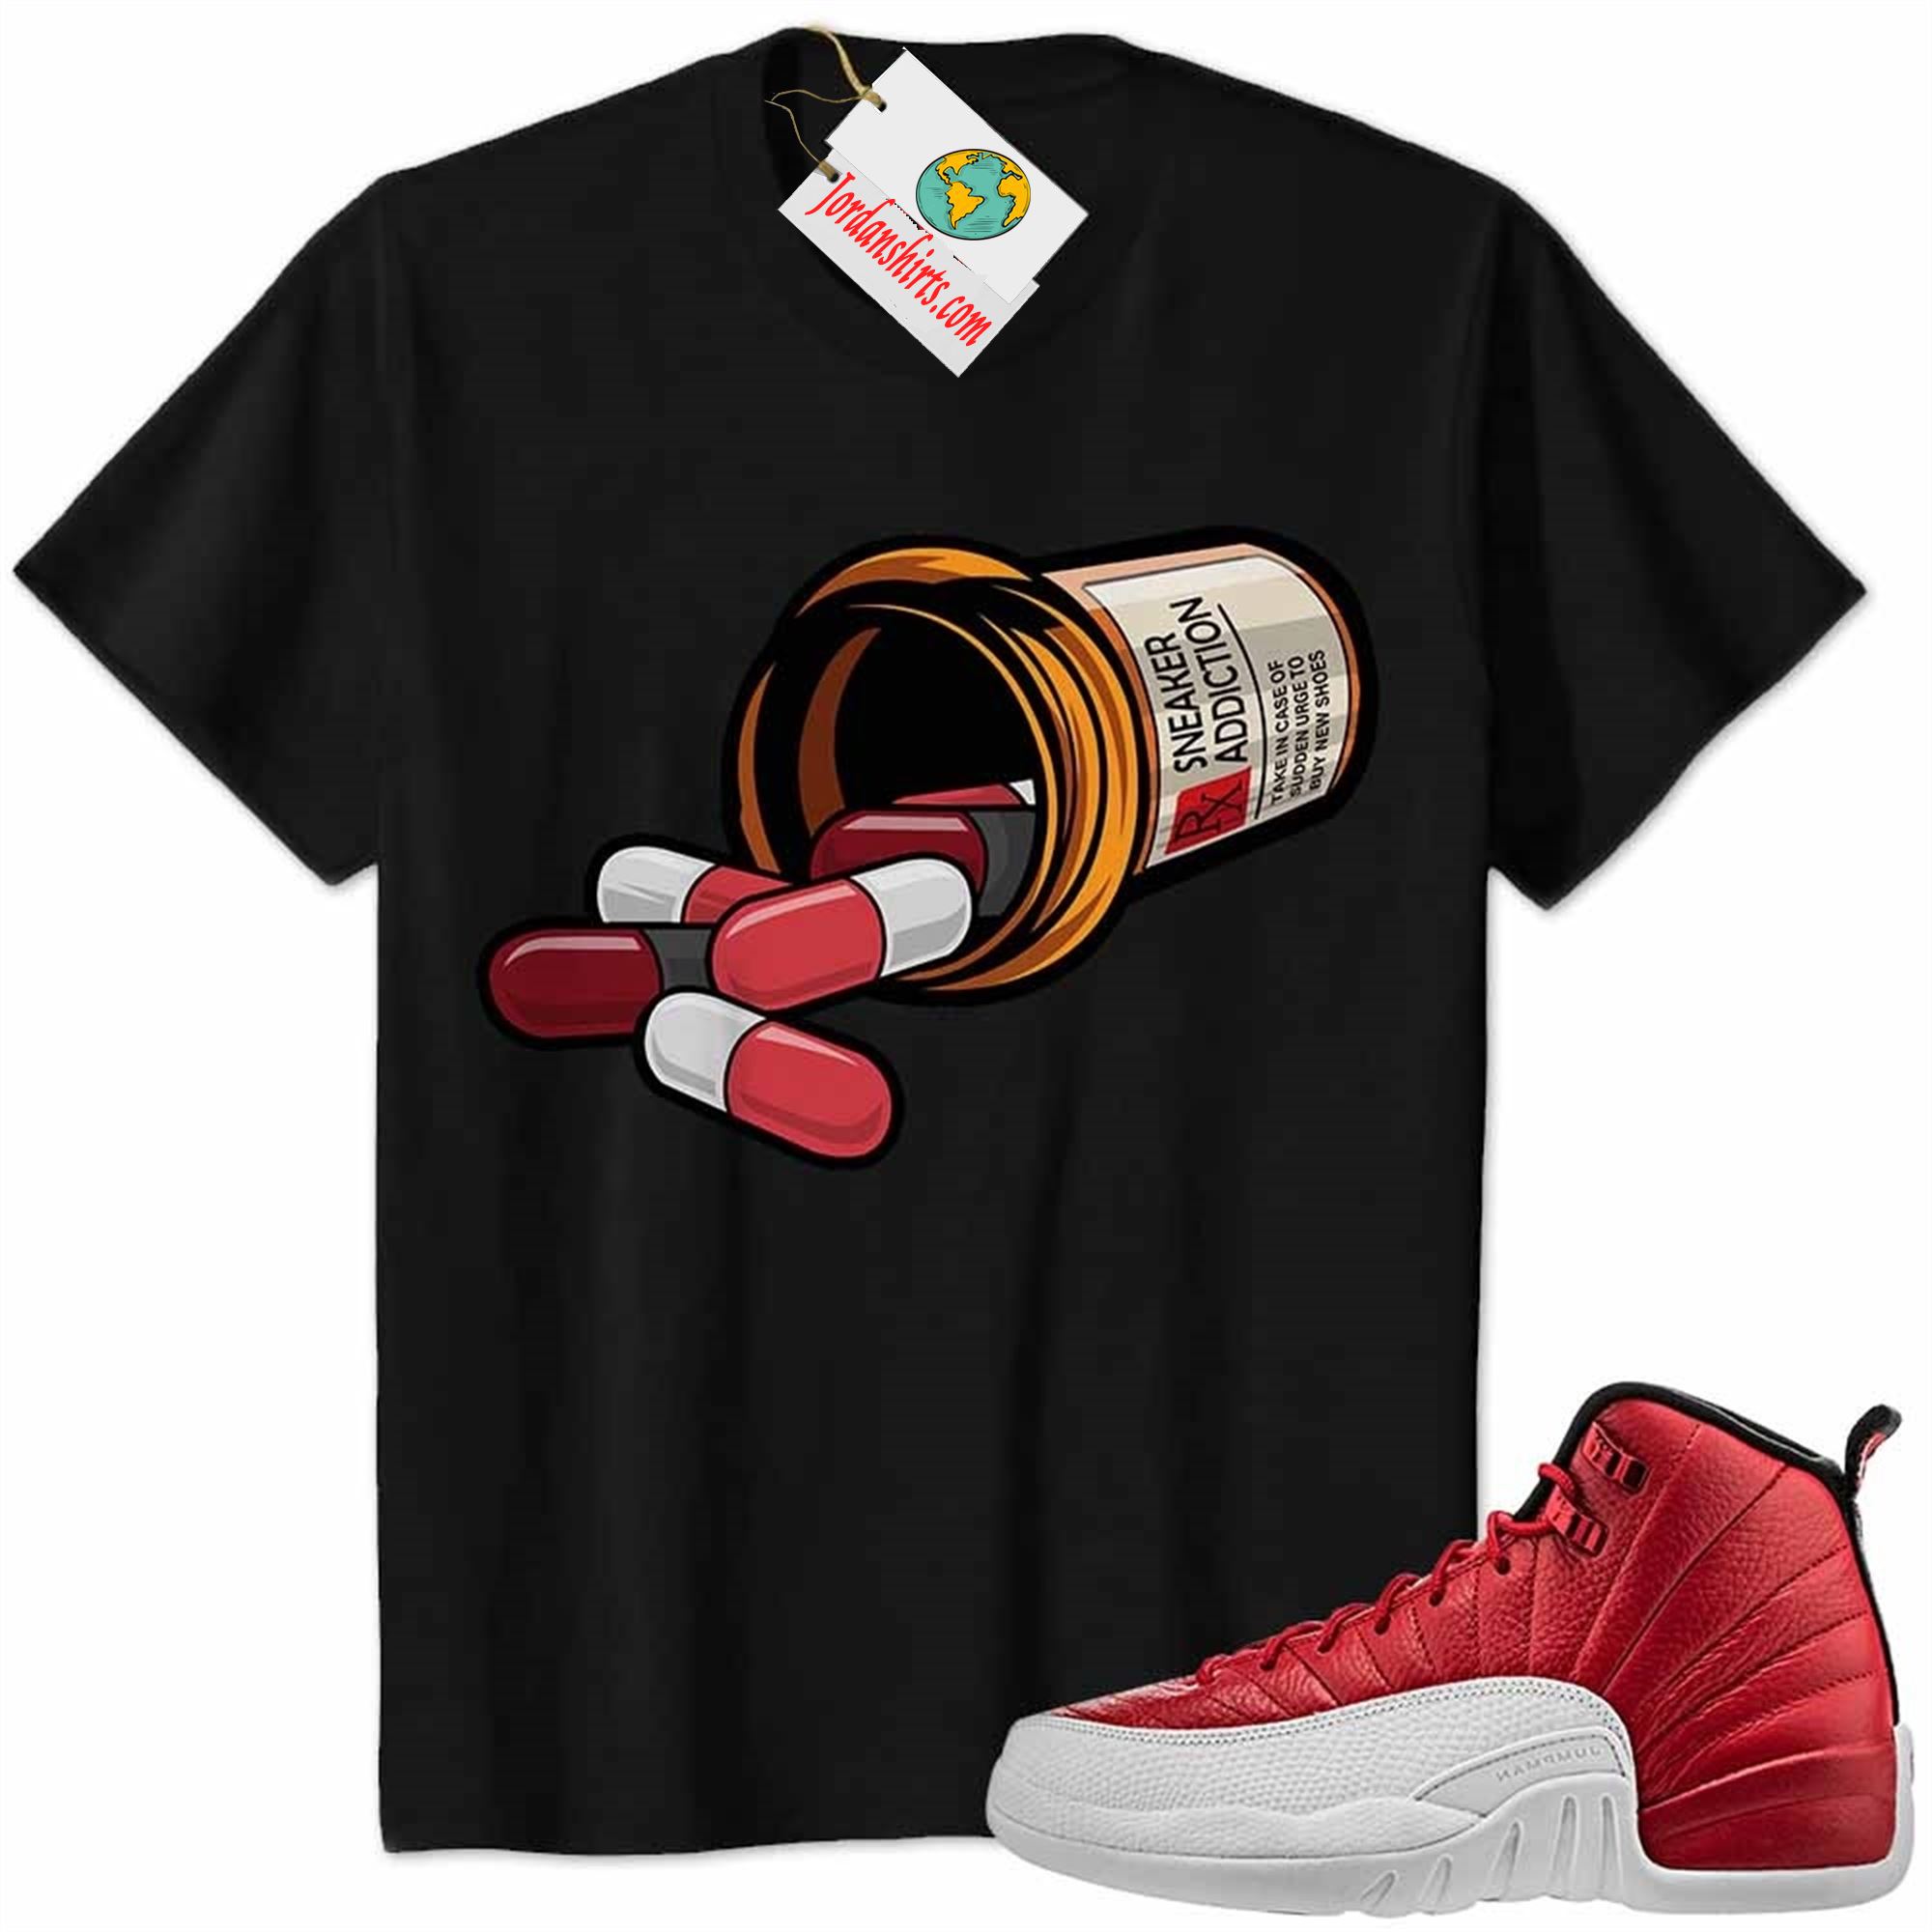 Jordan 12 Shirt, Rx Drugs Pill Bottle Sneaker Addiction Black Air Jordan 12 Gym Red 12s Plus Size Up To 5xl